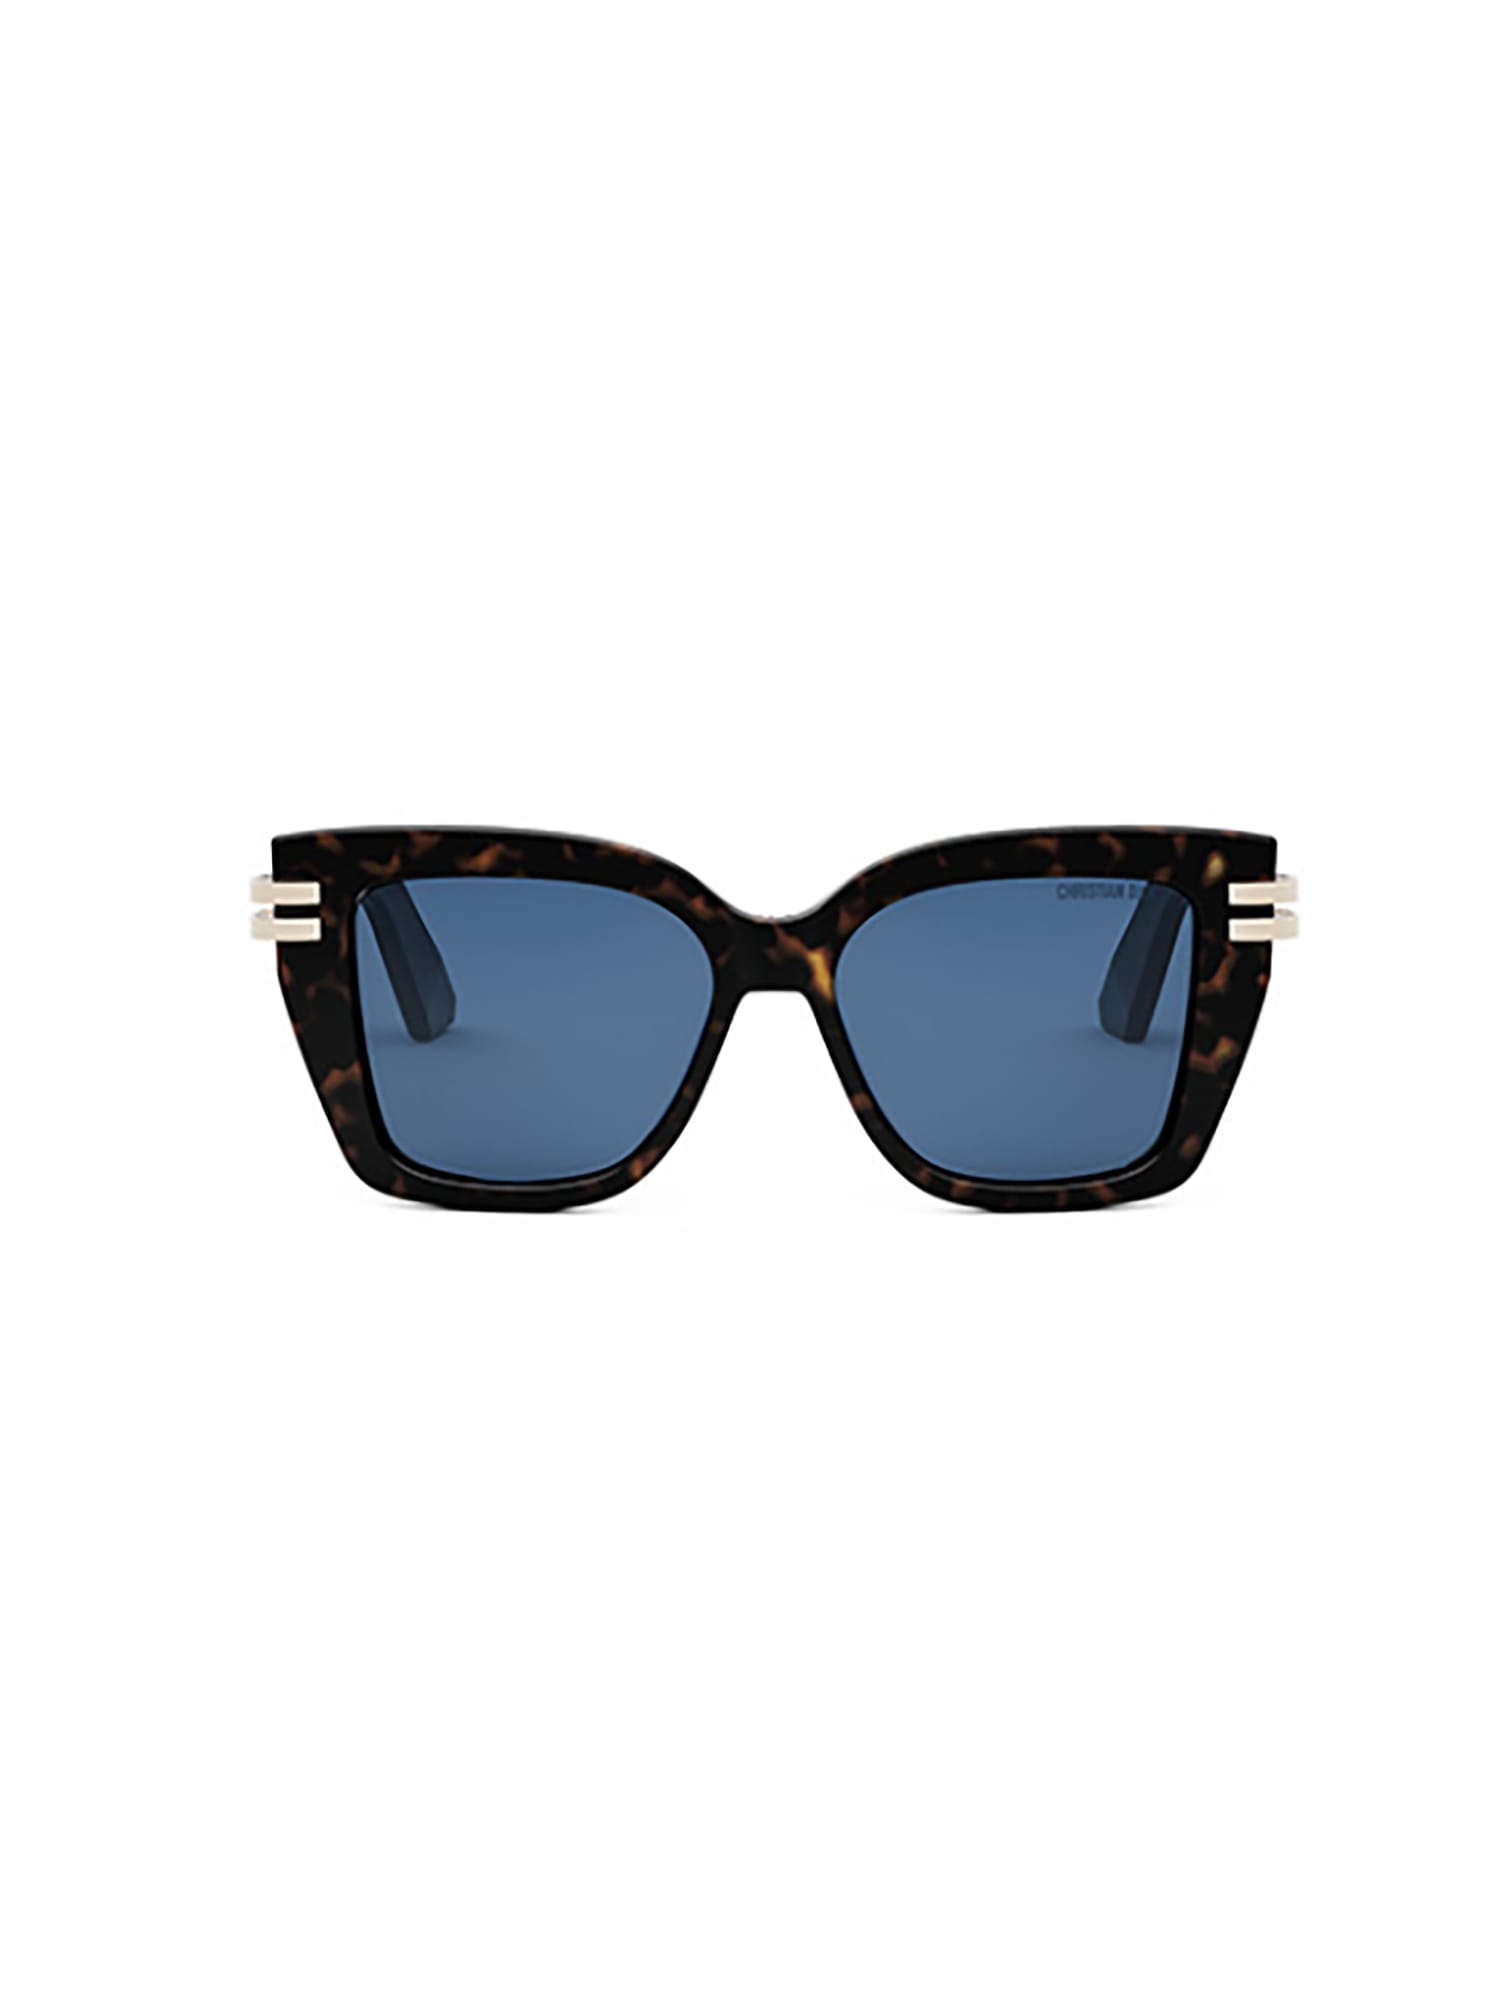 Dior C S1i Sunglasses In Blue